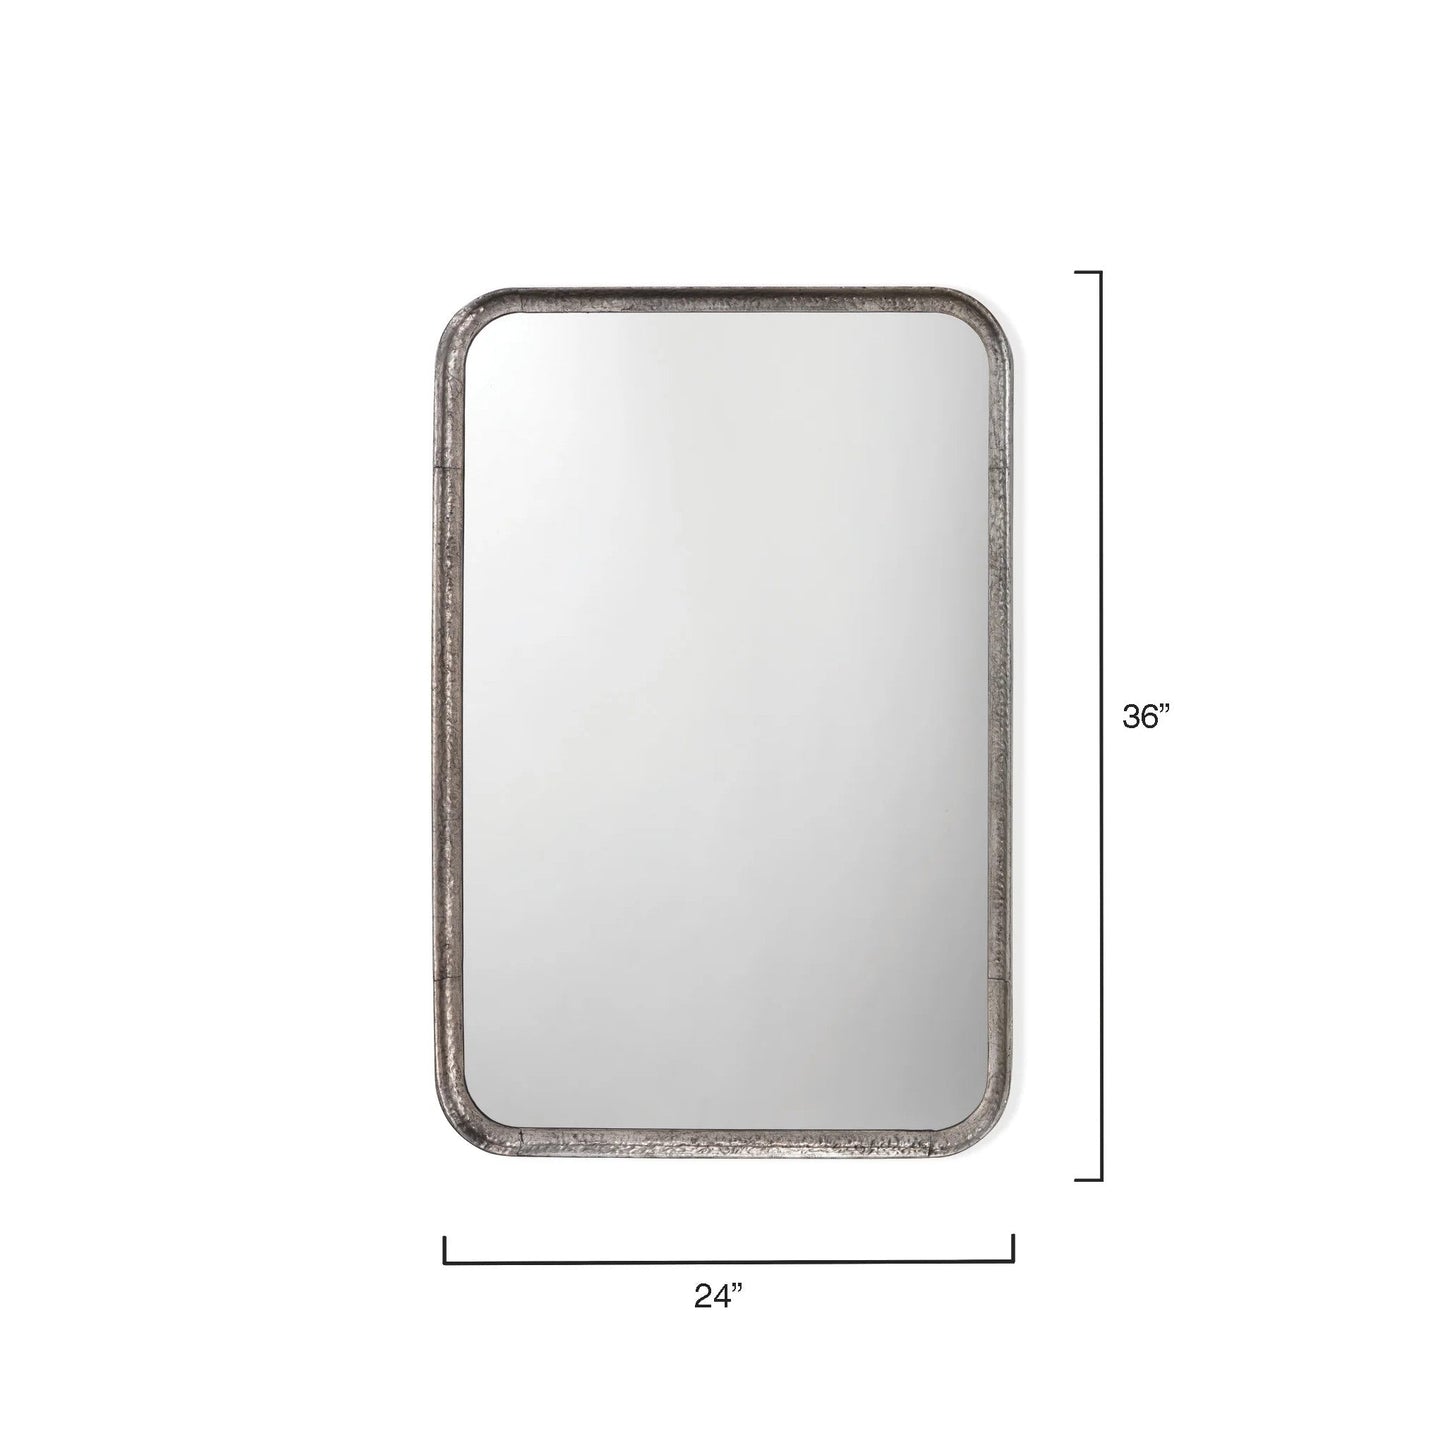 Jamie Young Principle 24" x 36" Rectangular Vanity Mirror With Silver Leaf Metal Frame